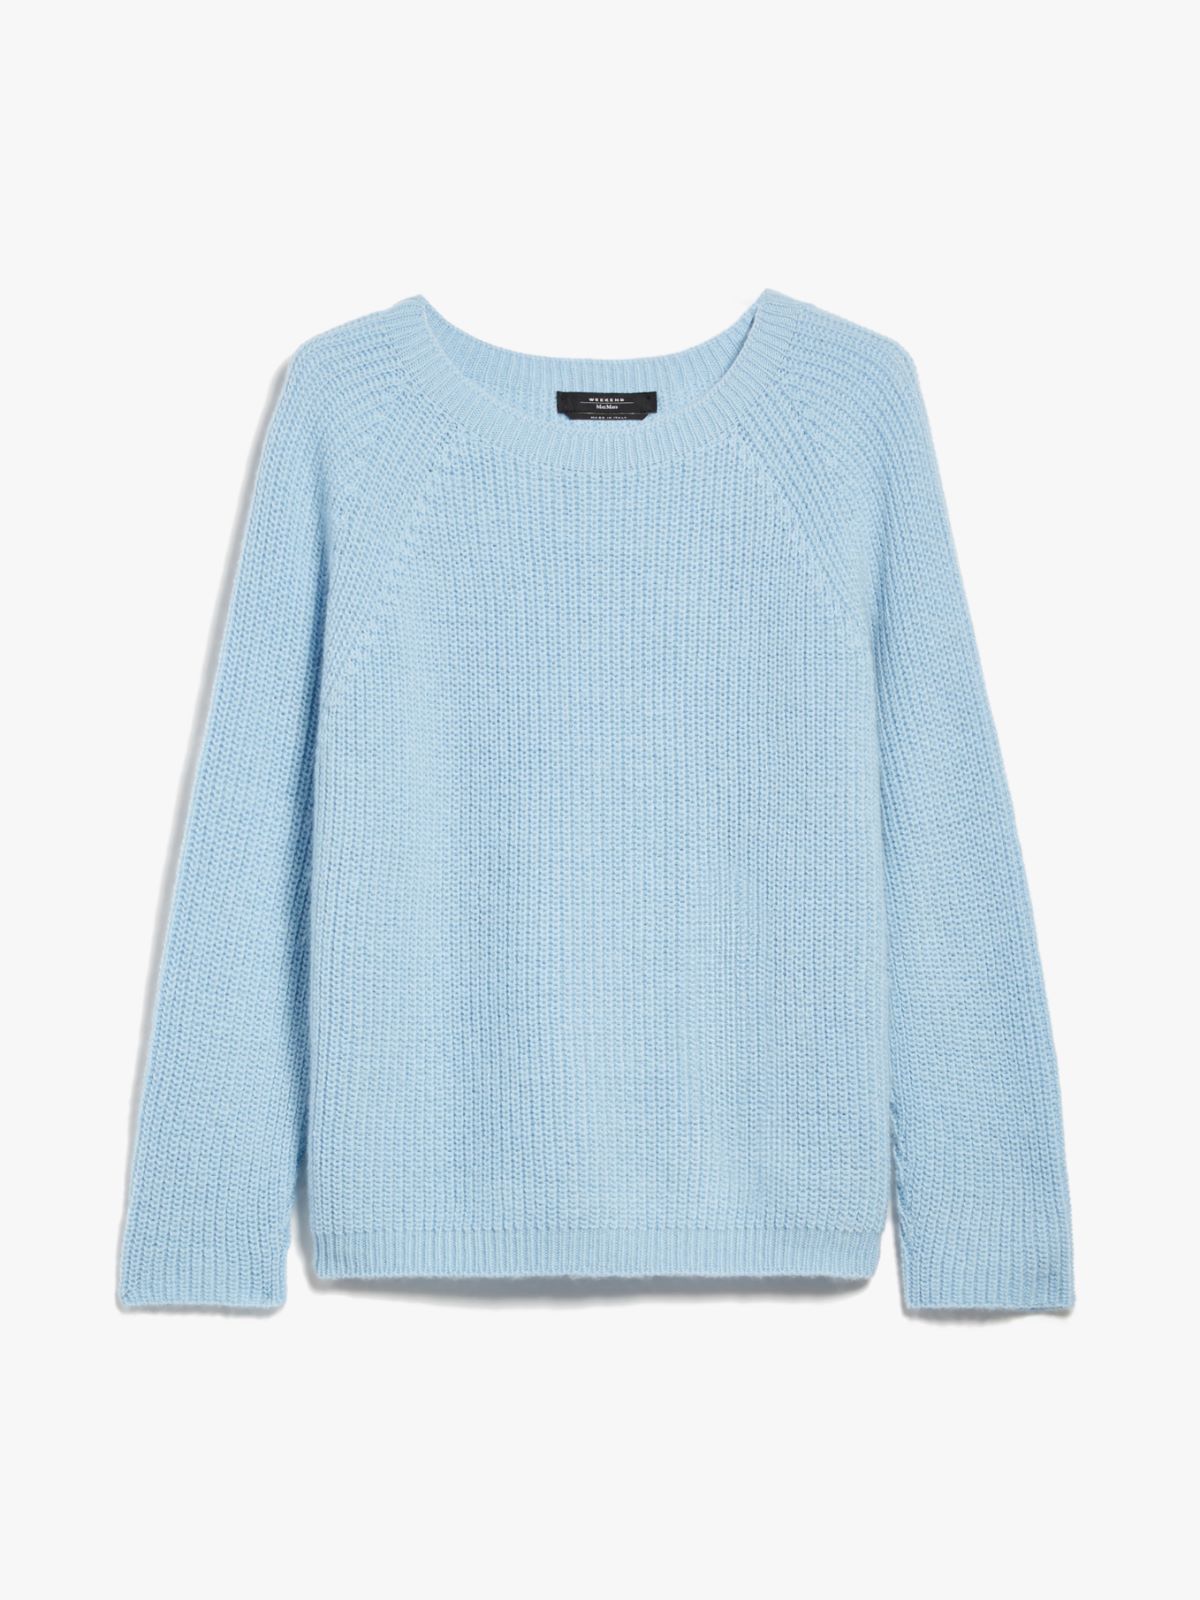 Mohair yarn sweater - SKY BLUE - Weekend Max Mara - 6